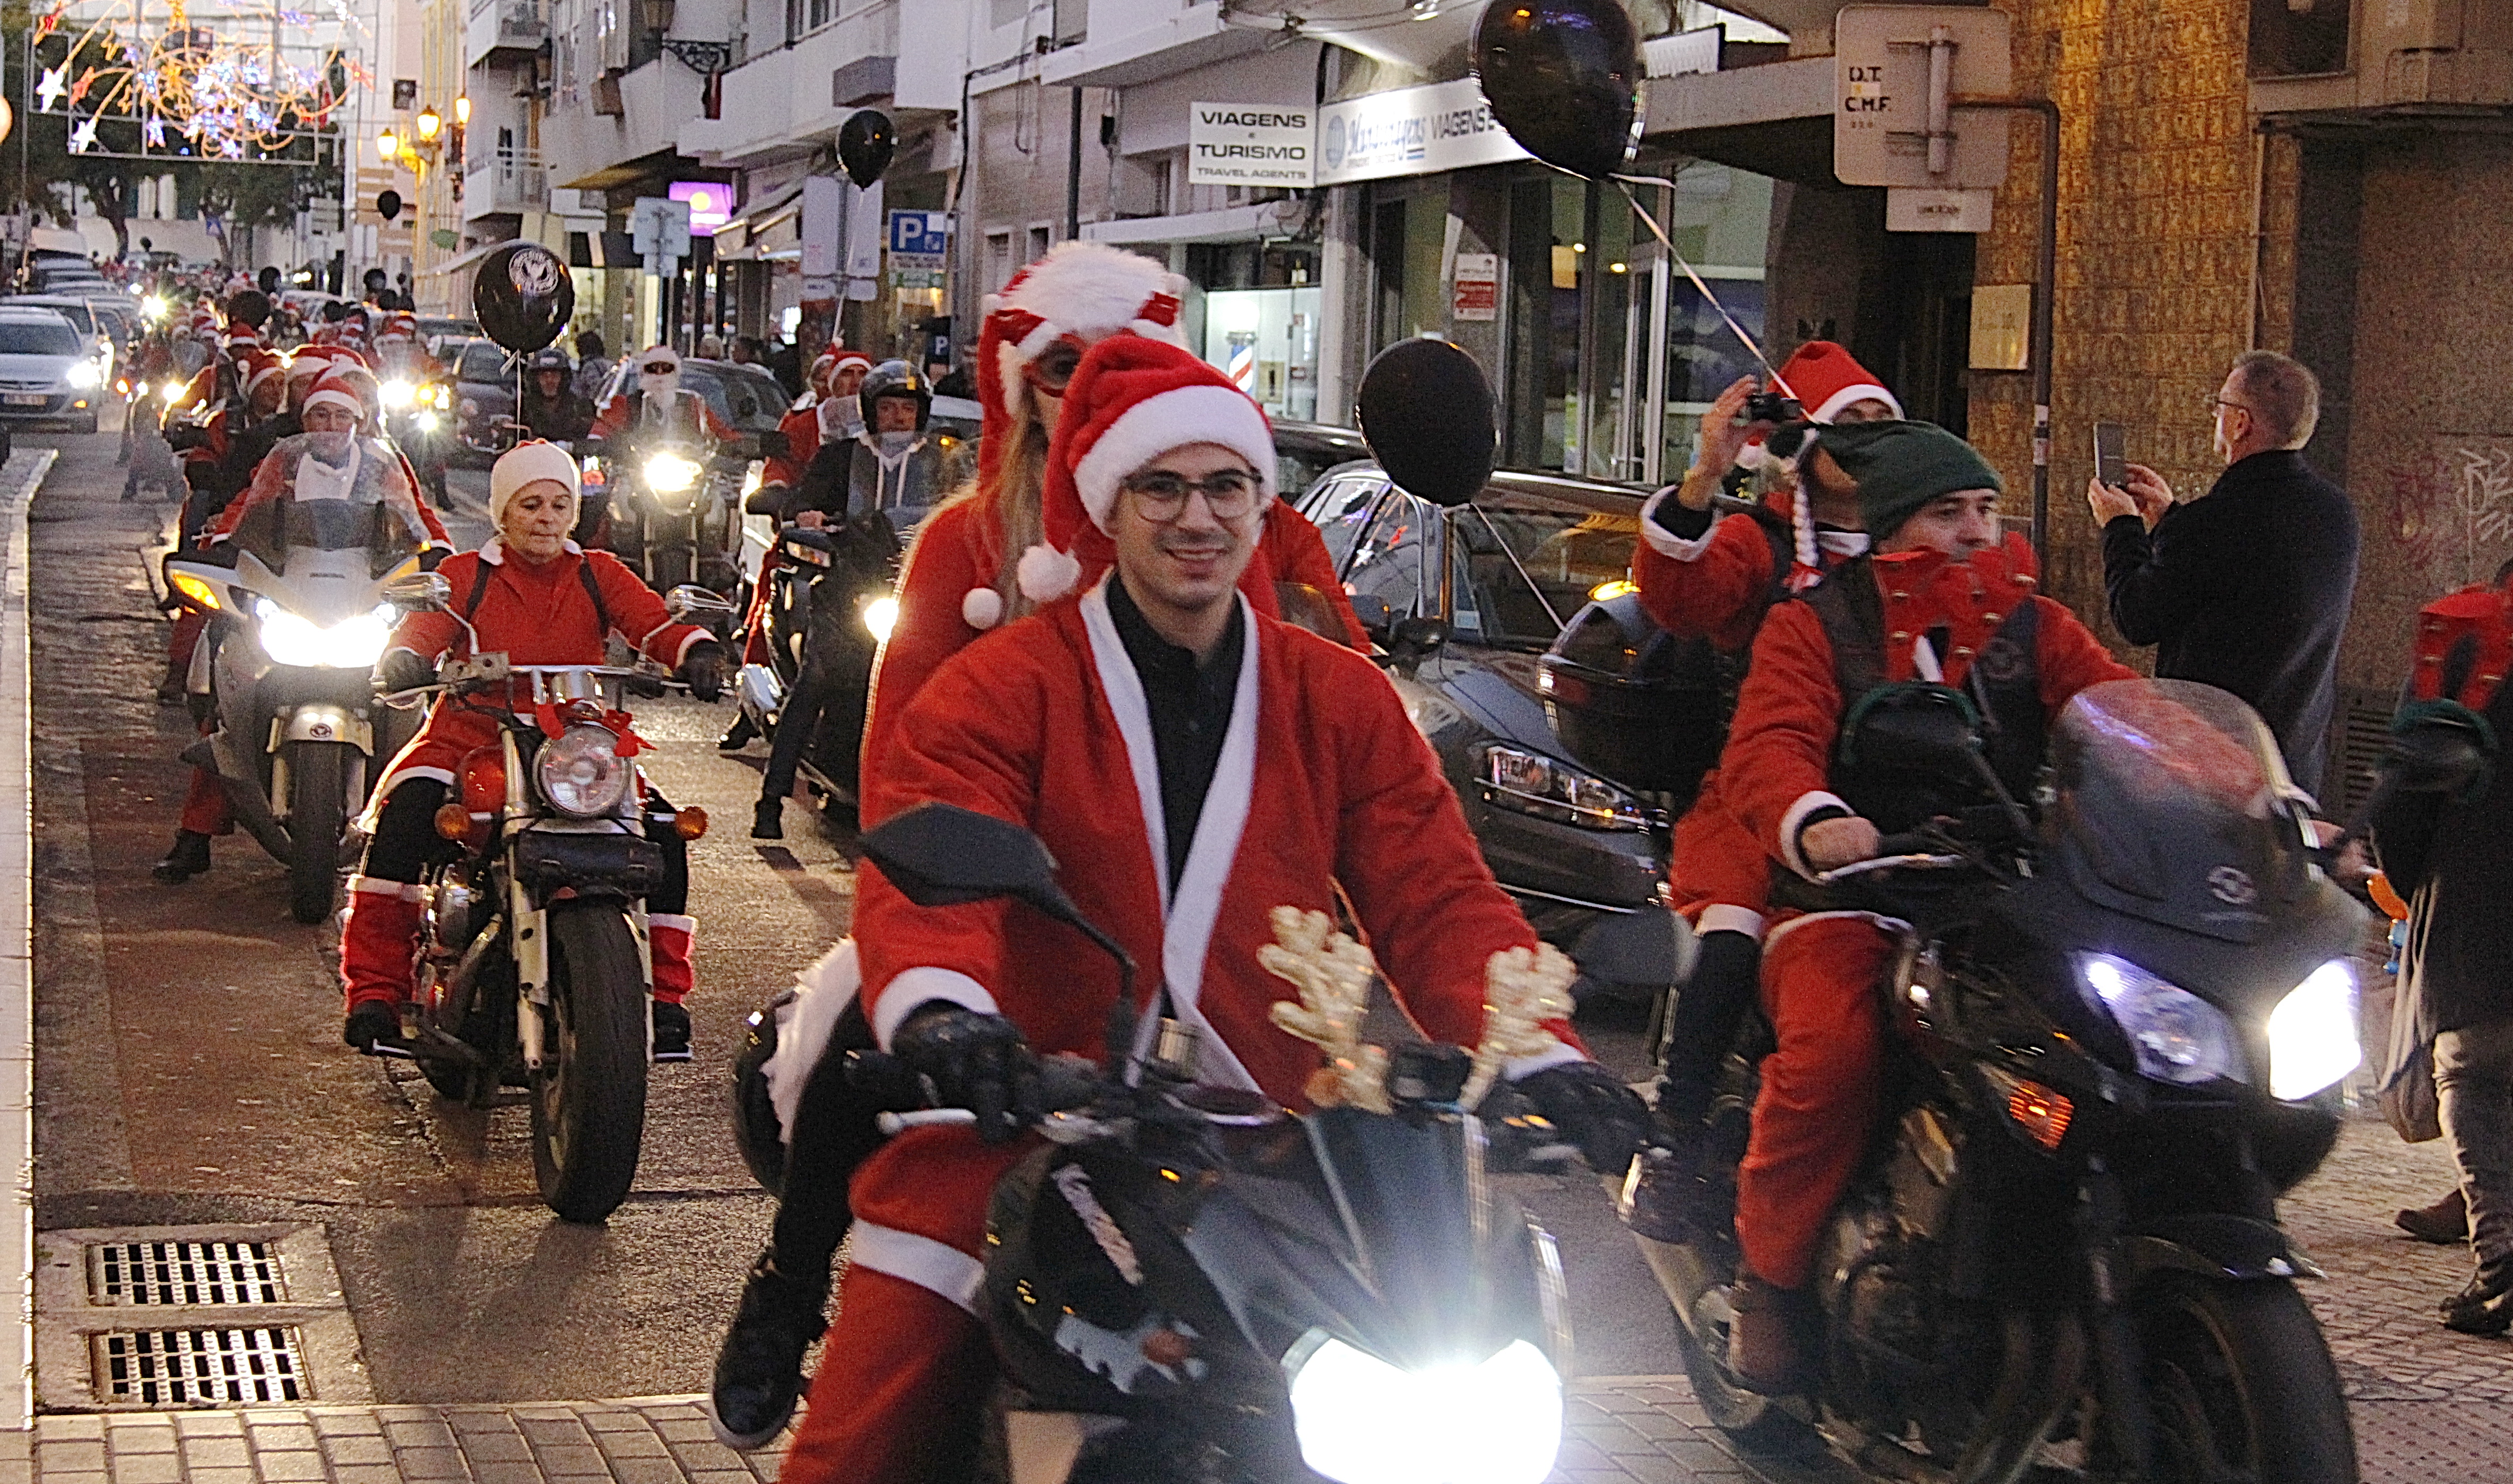 El desfile navideño del Moto Club Faro anima la capital del Algarve